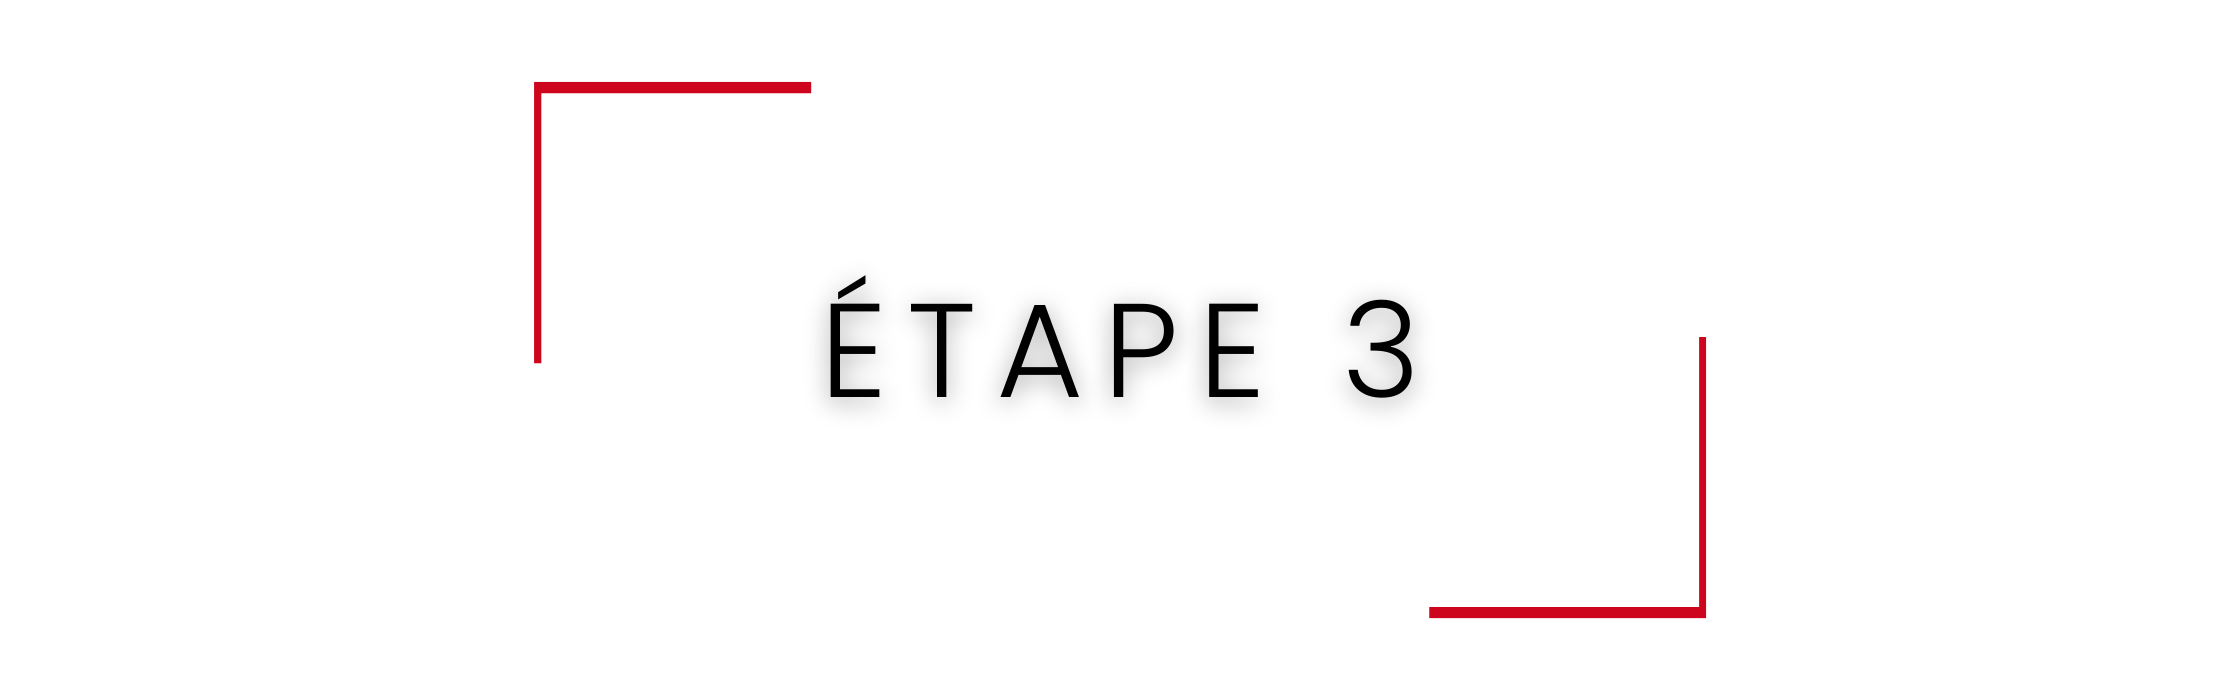 etape 3 : statuts CFE